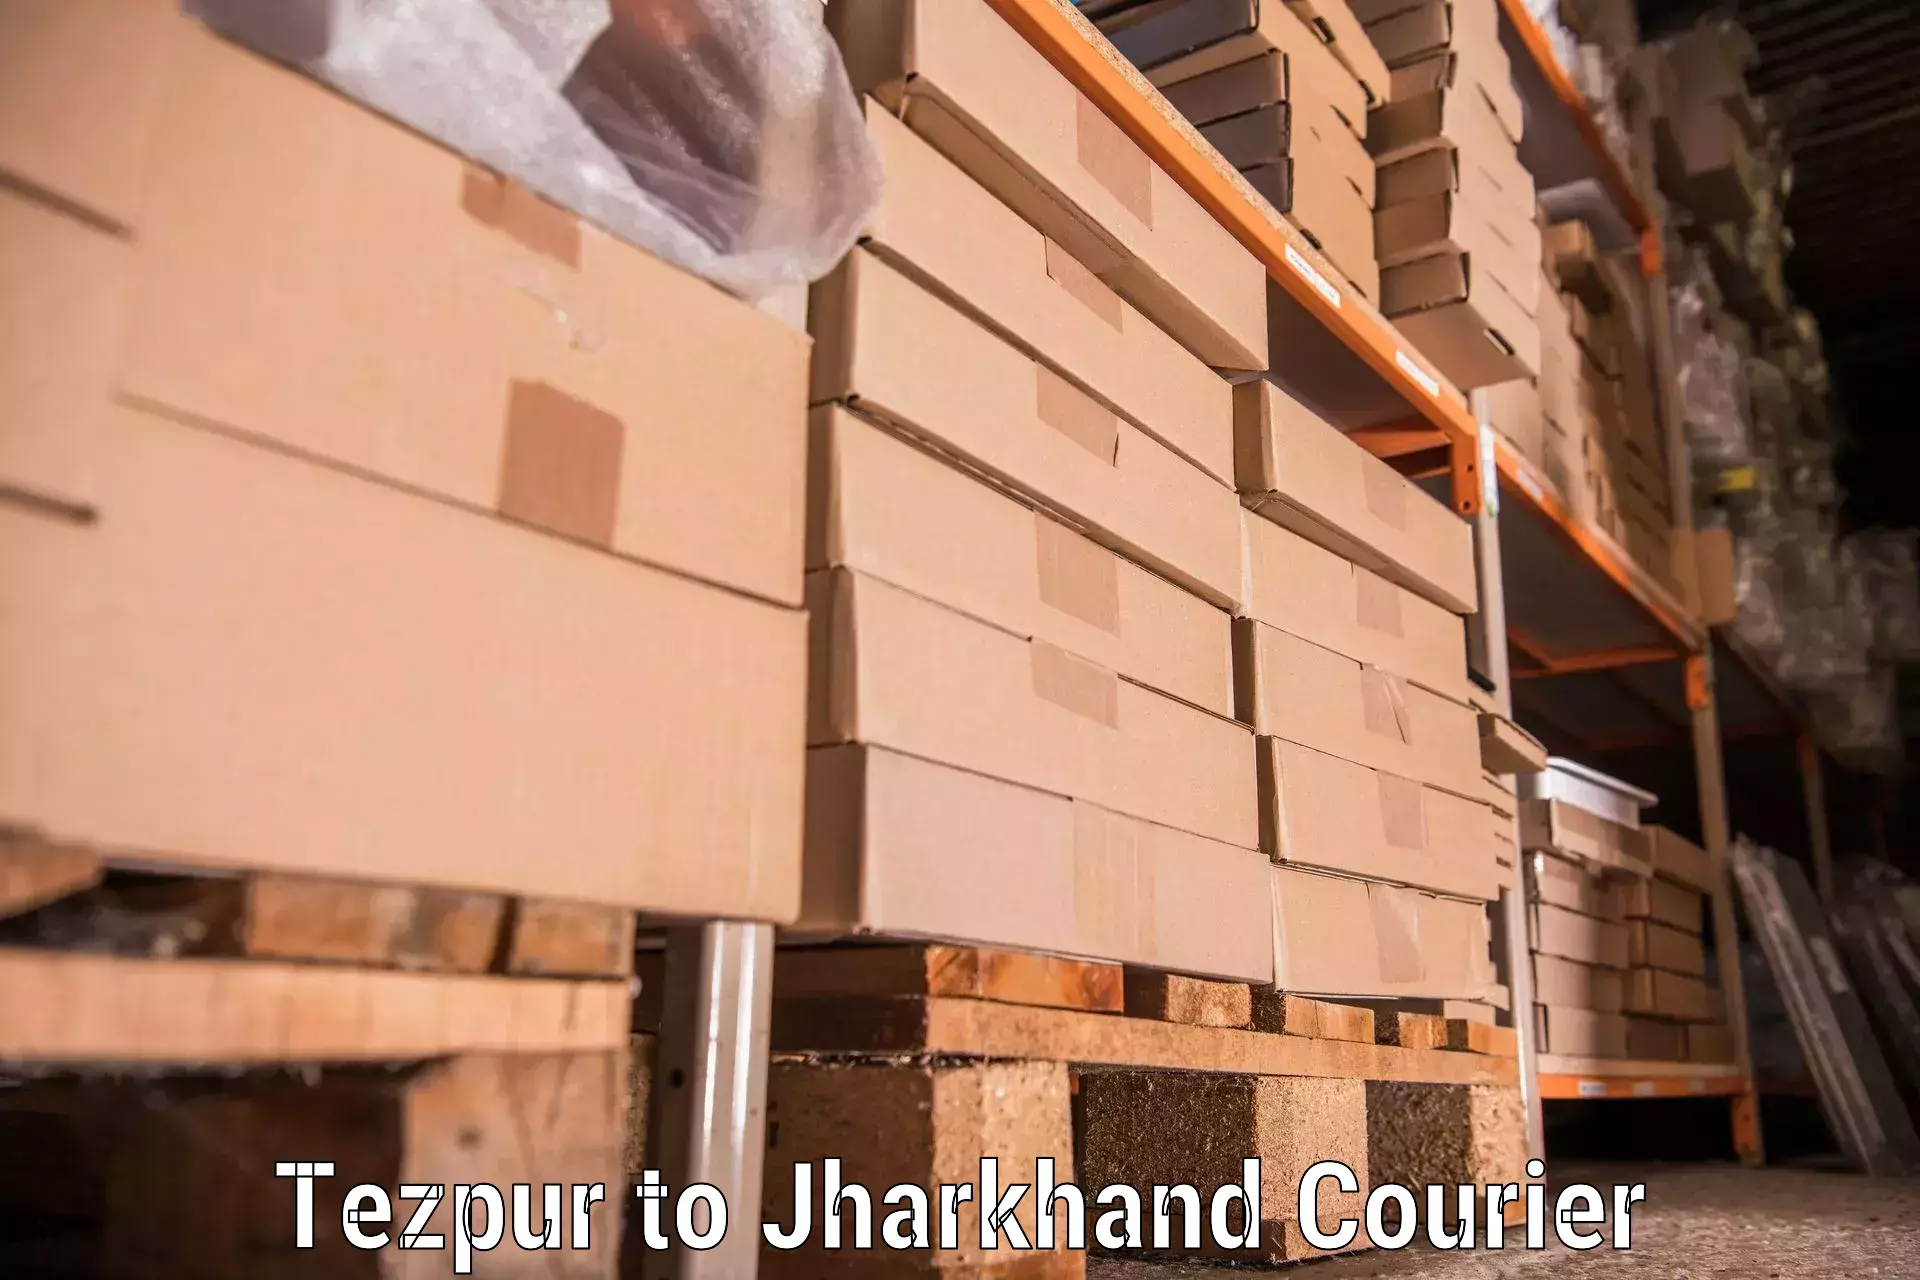 Professional moving company Tezpur to Dhanbad